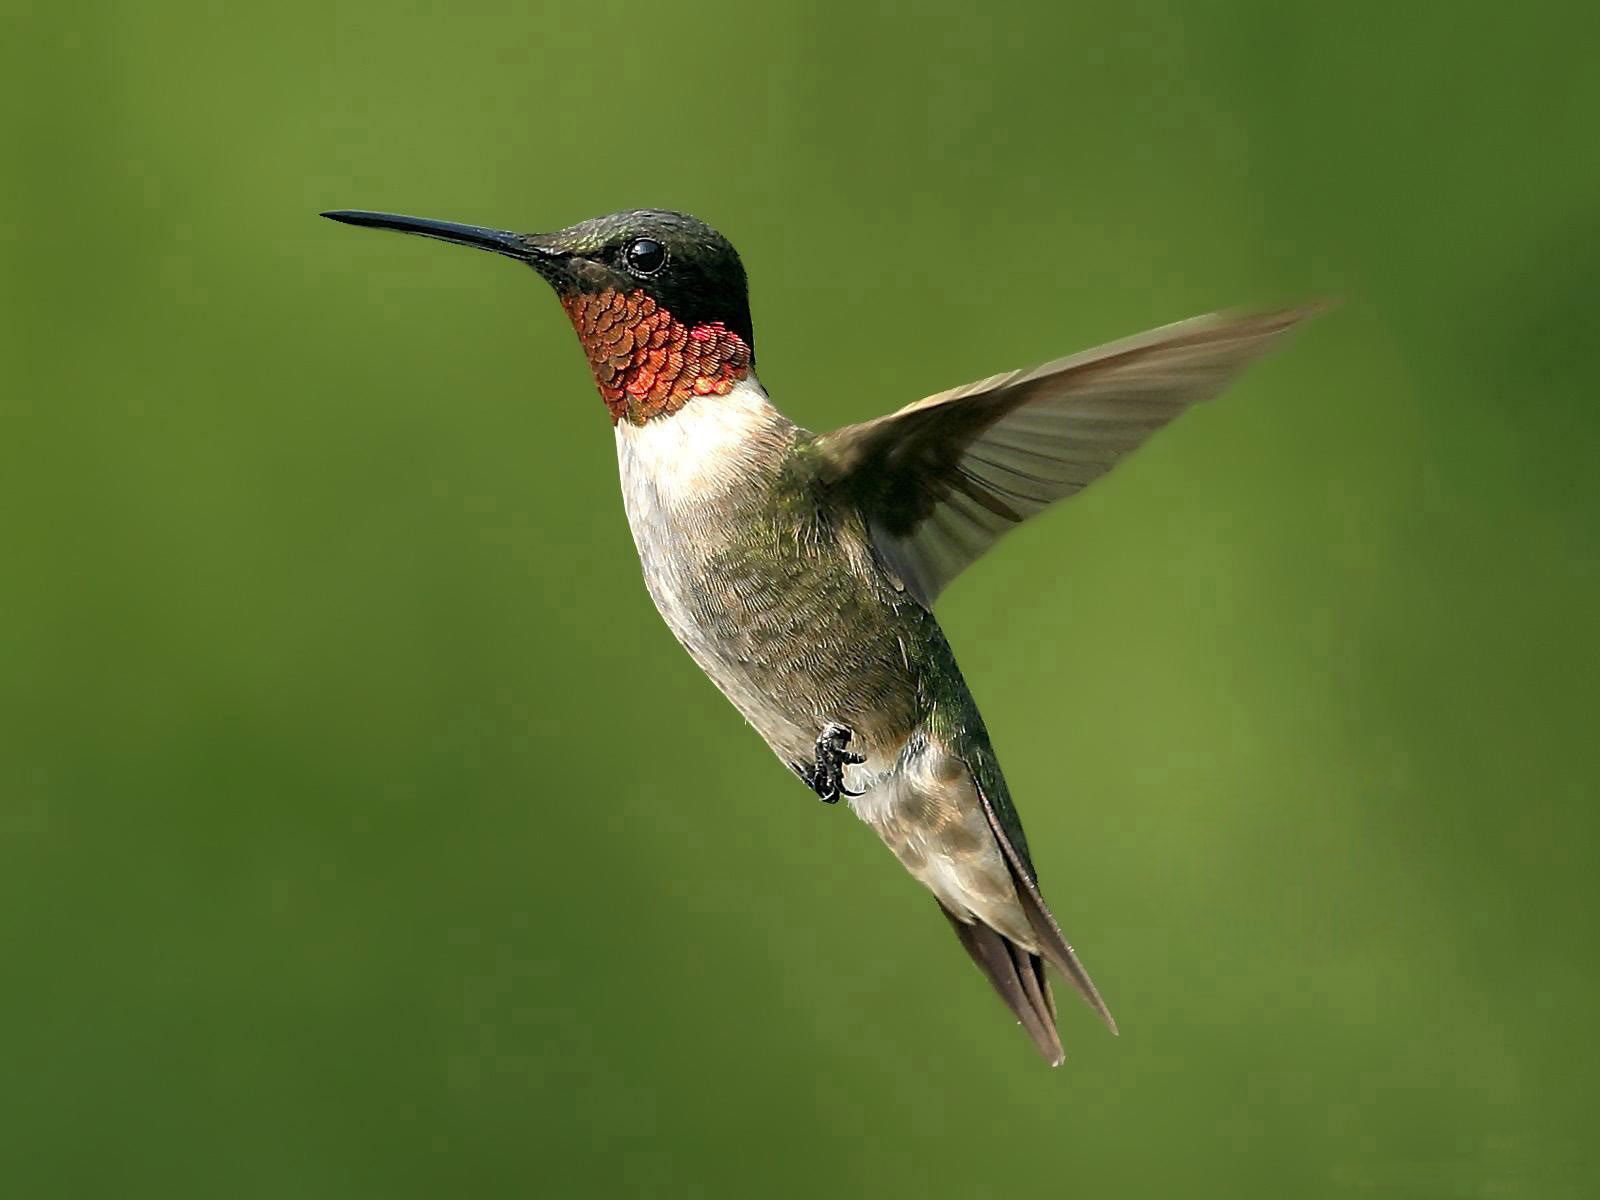 flying bird - Google Search | Bird | Pinterest | Hummingbird, Bird ...